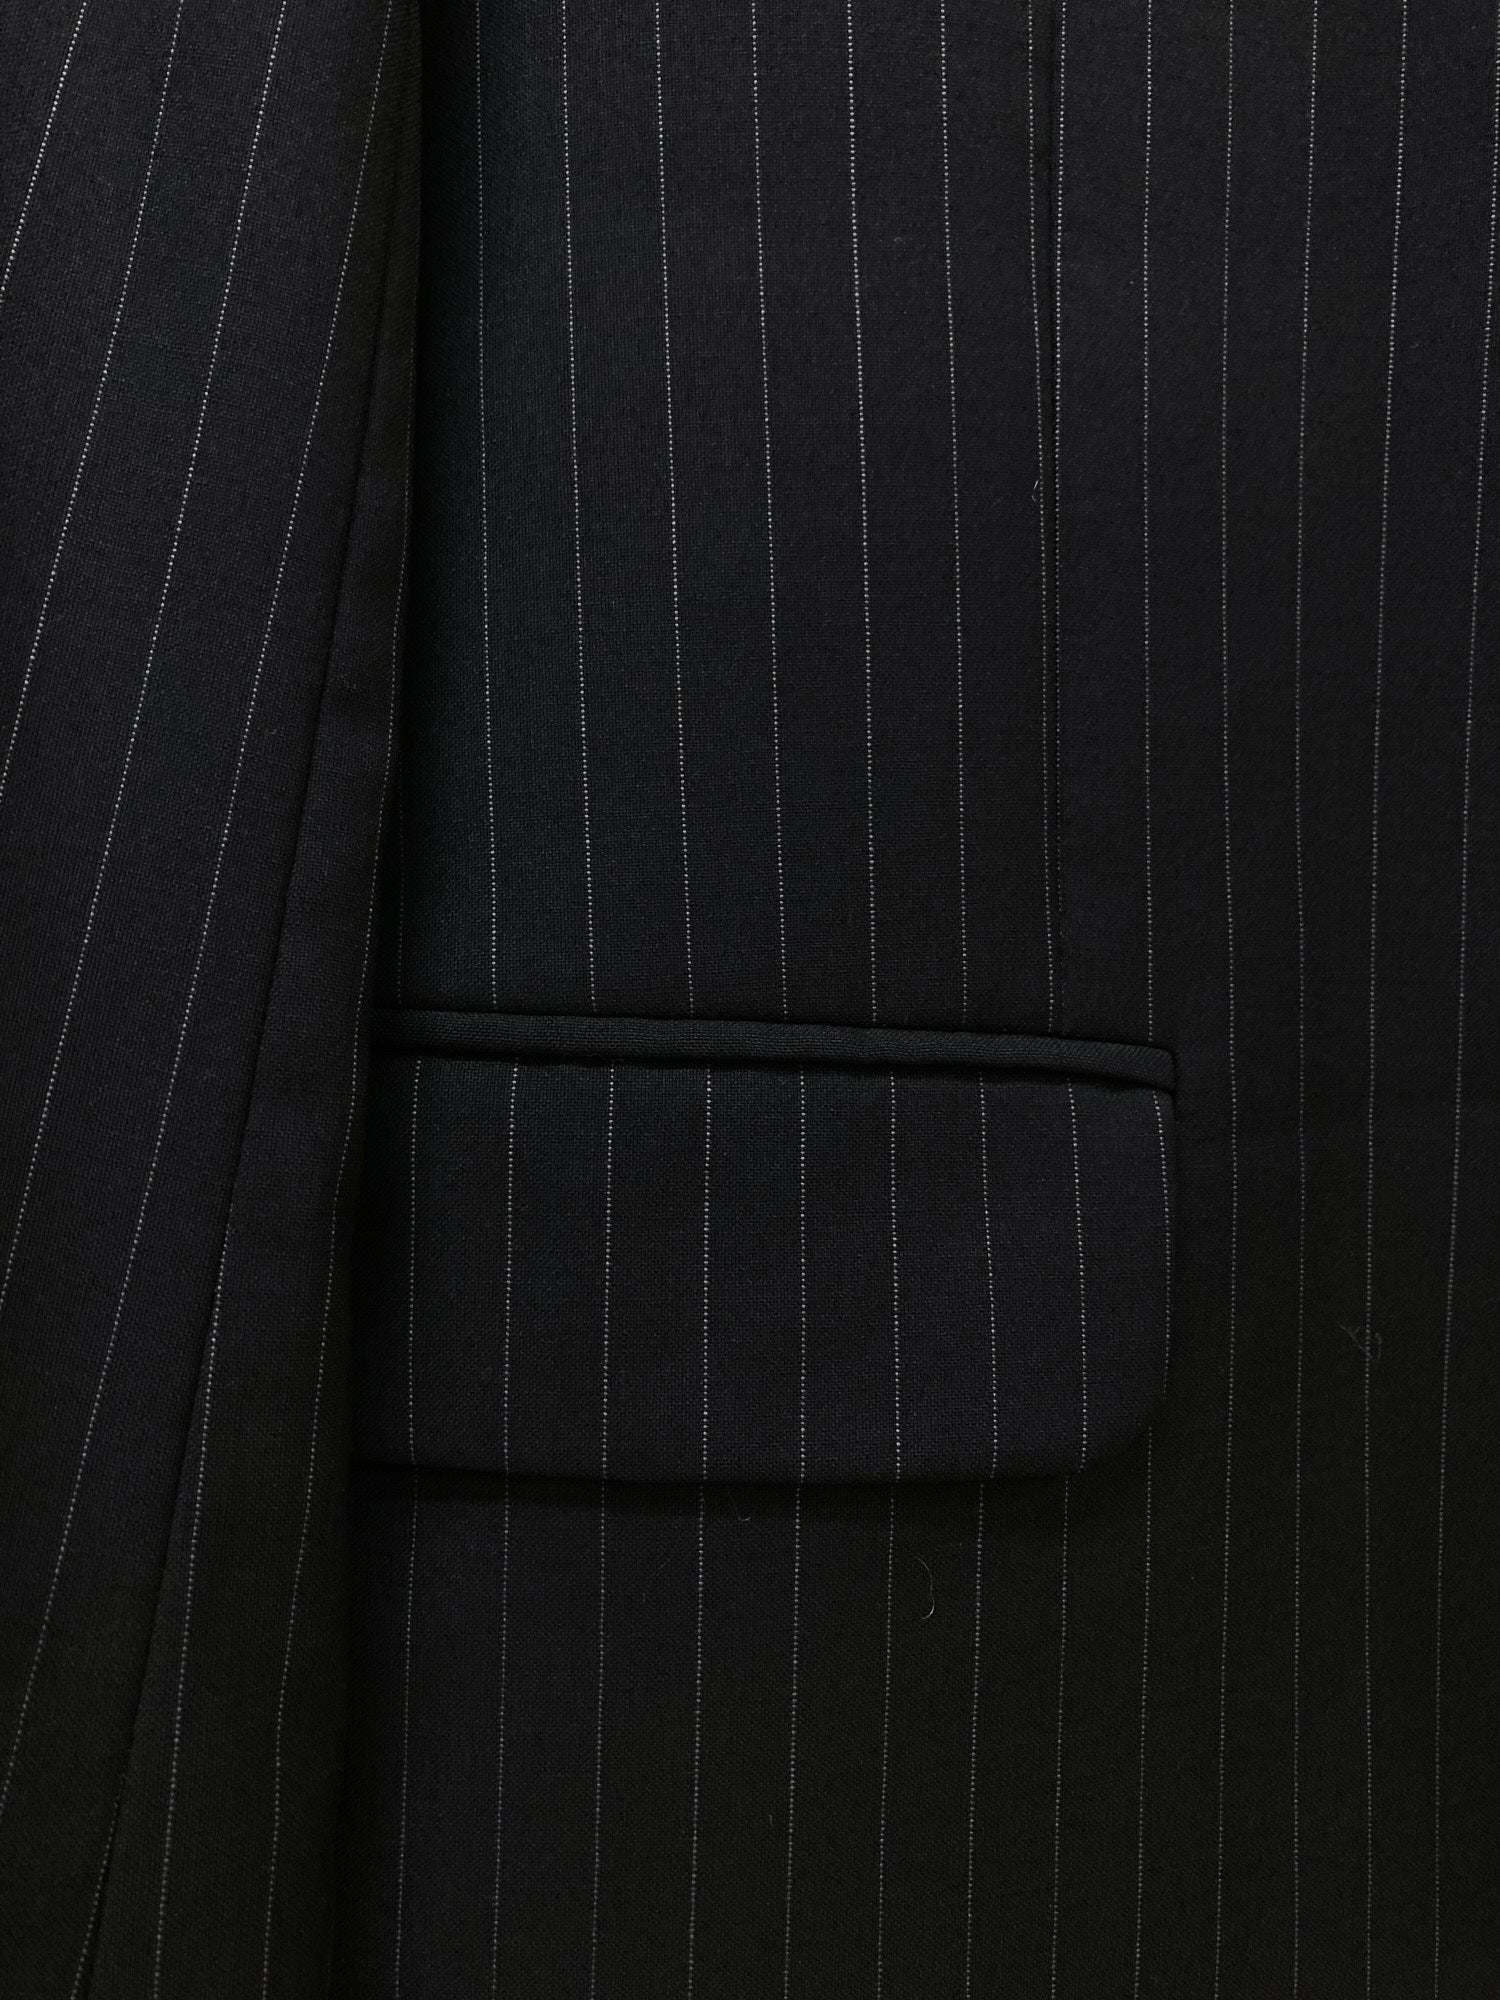 Fendi Uomo 1990s striped black wool three button blazer - size 48